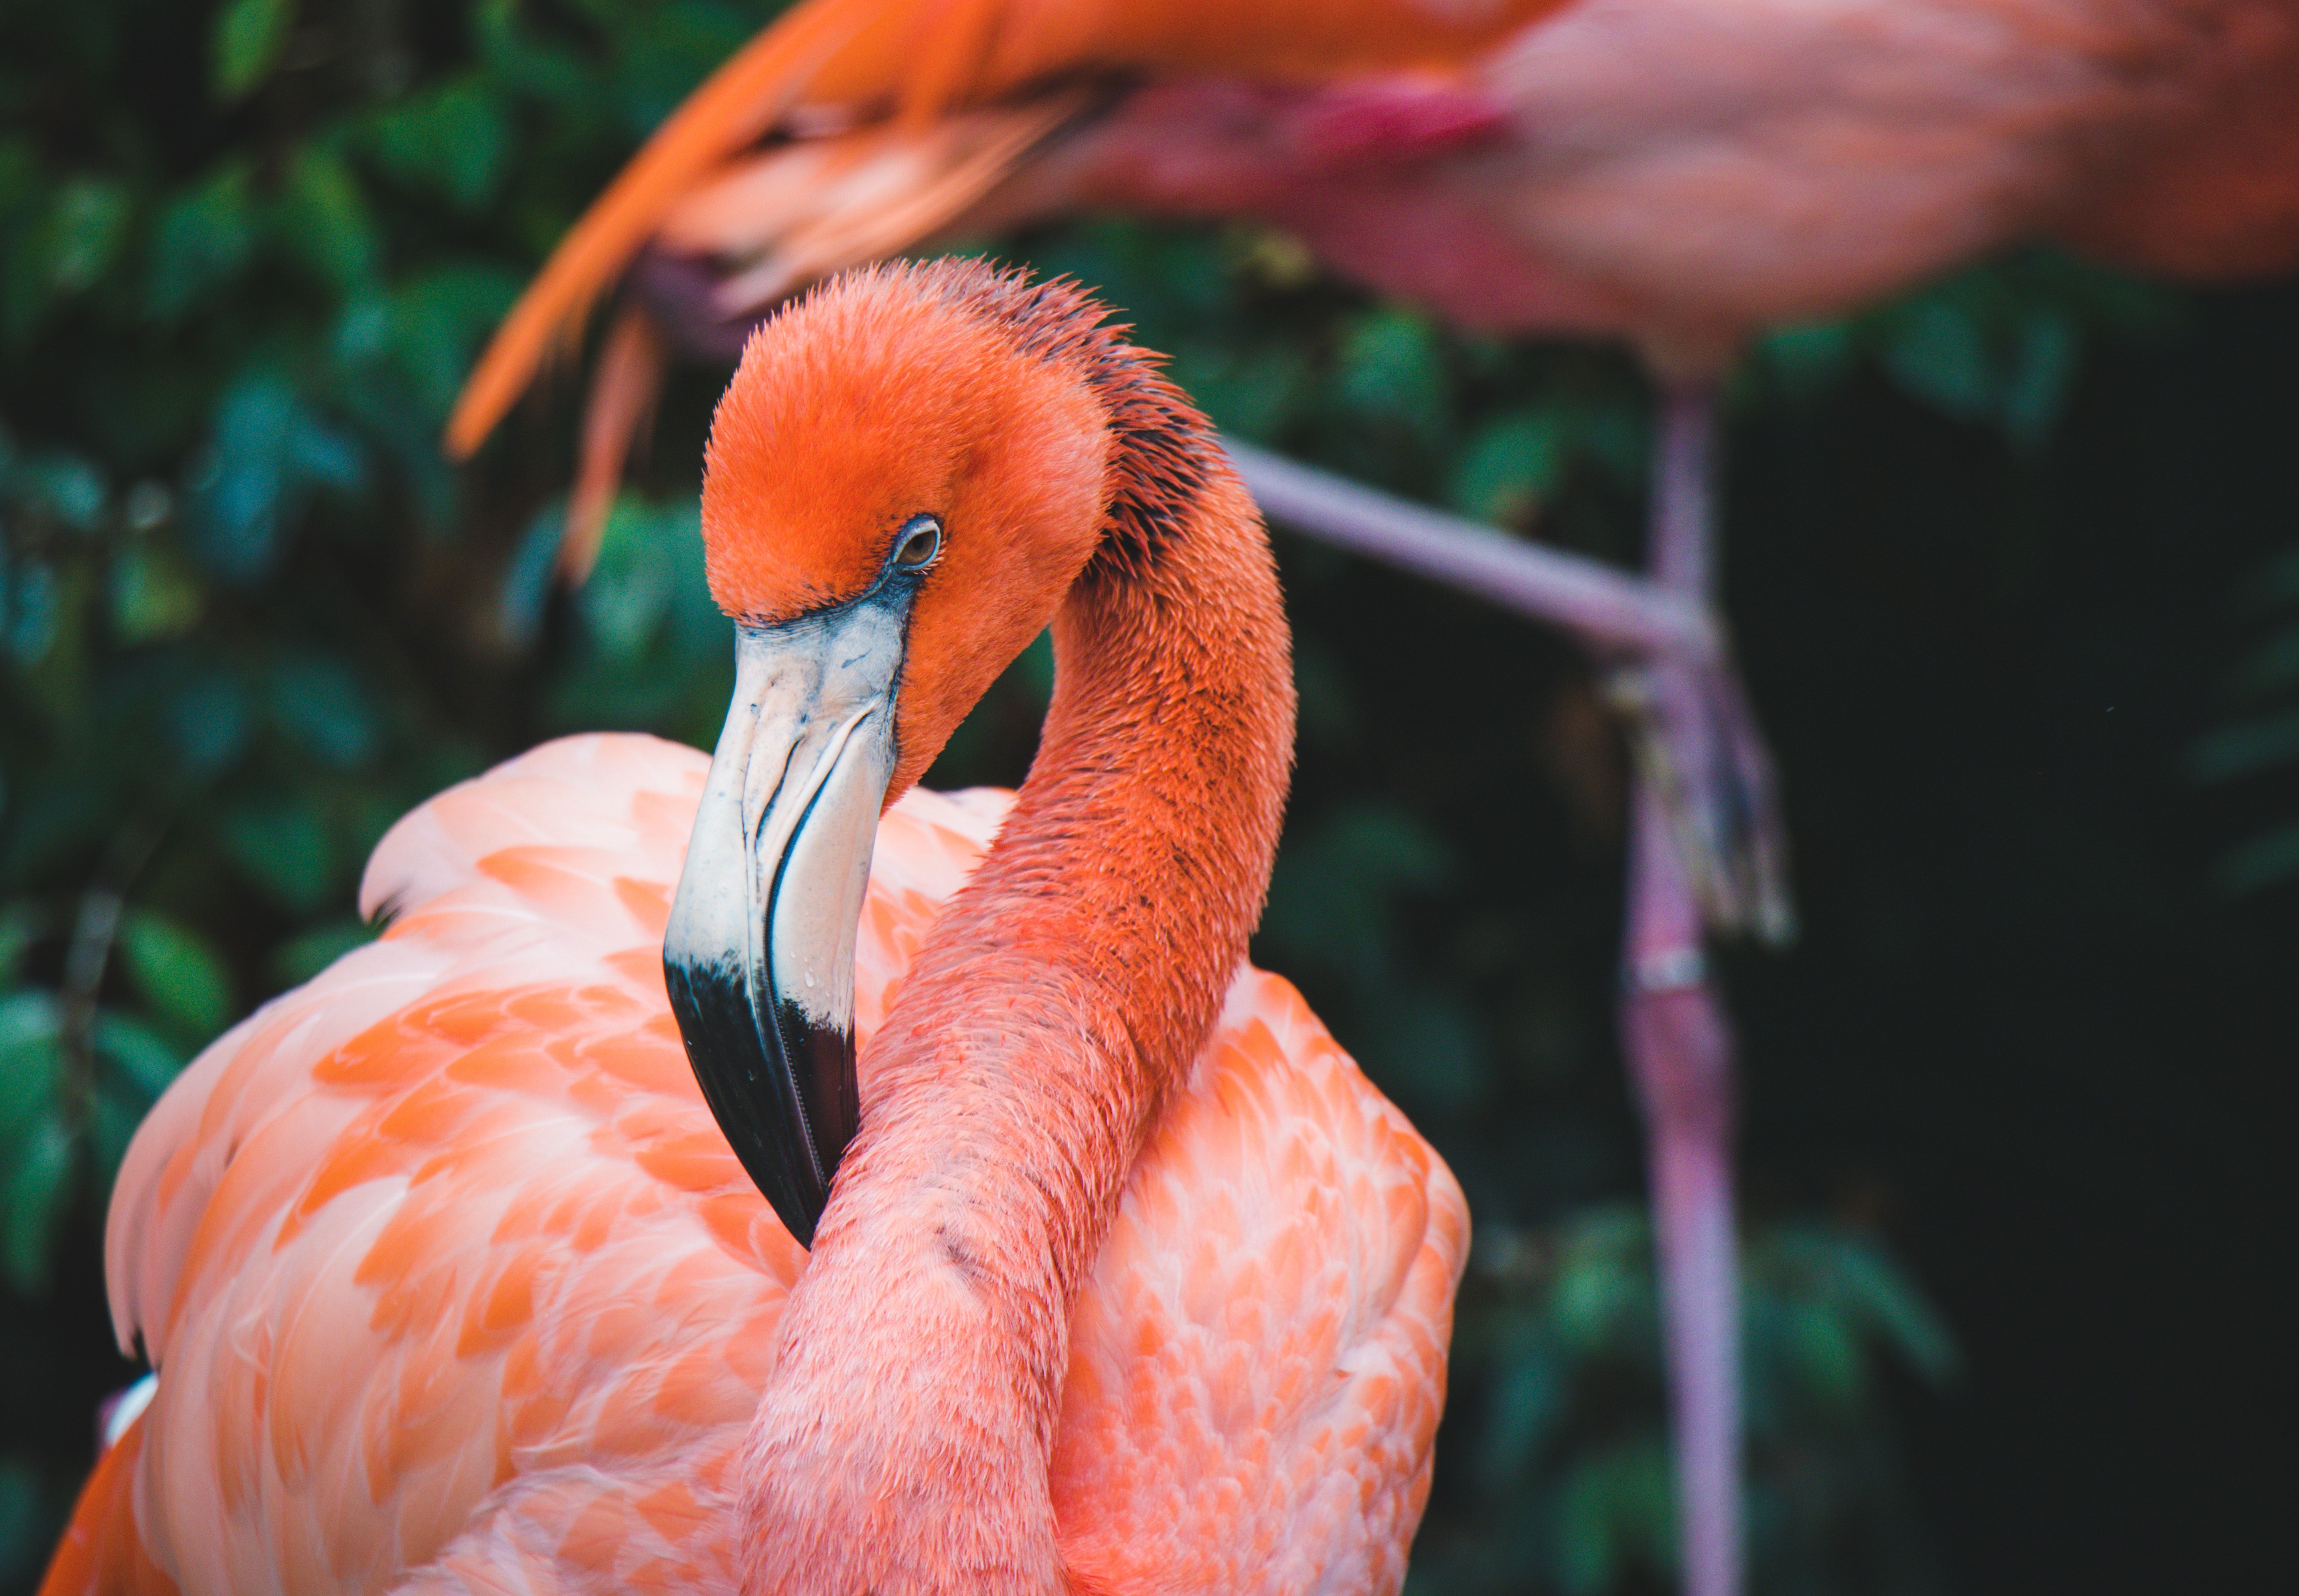  Flamingo Hintergrundbild 5762x4000. Flamingo Bilder Und Fotos · Kostenlos Downloaden · Stock Fotos